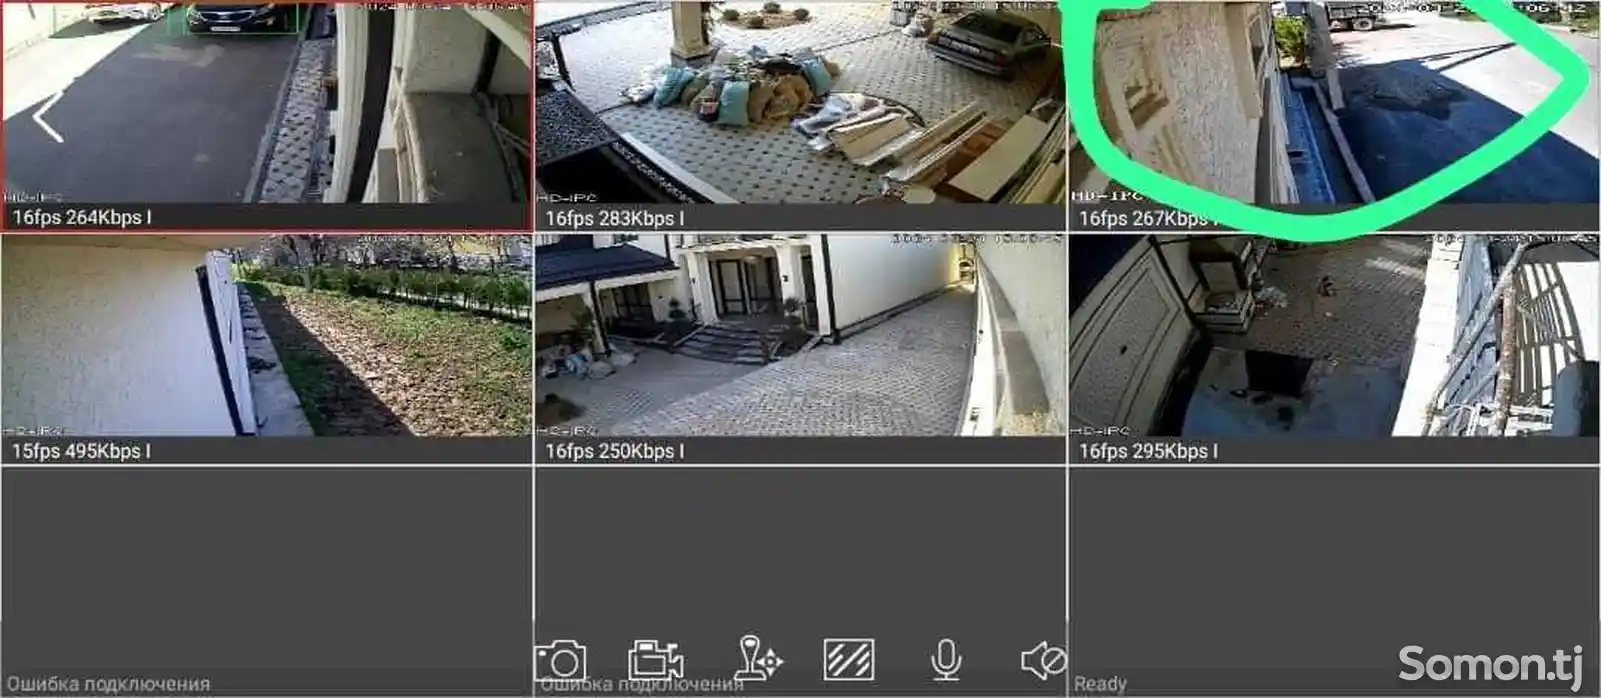 Услуги по установке камер видеонаблюдения с гарантией-10